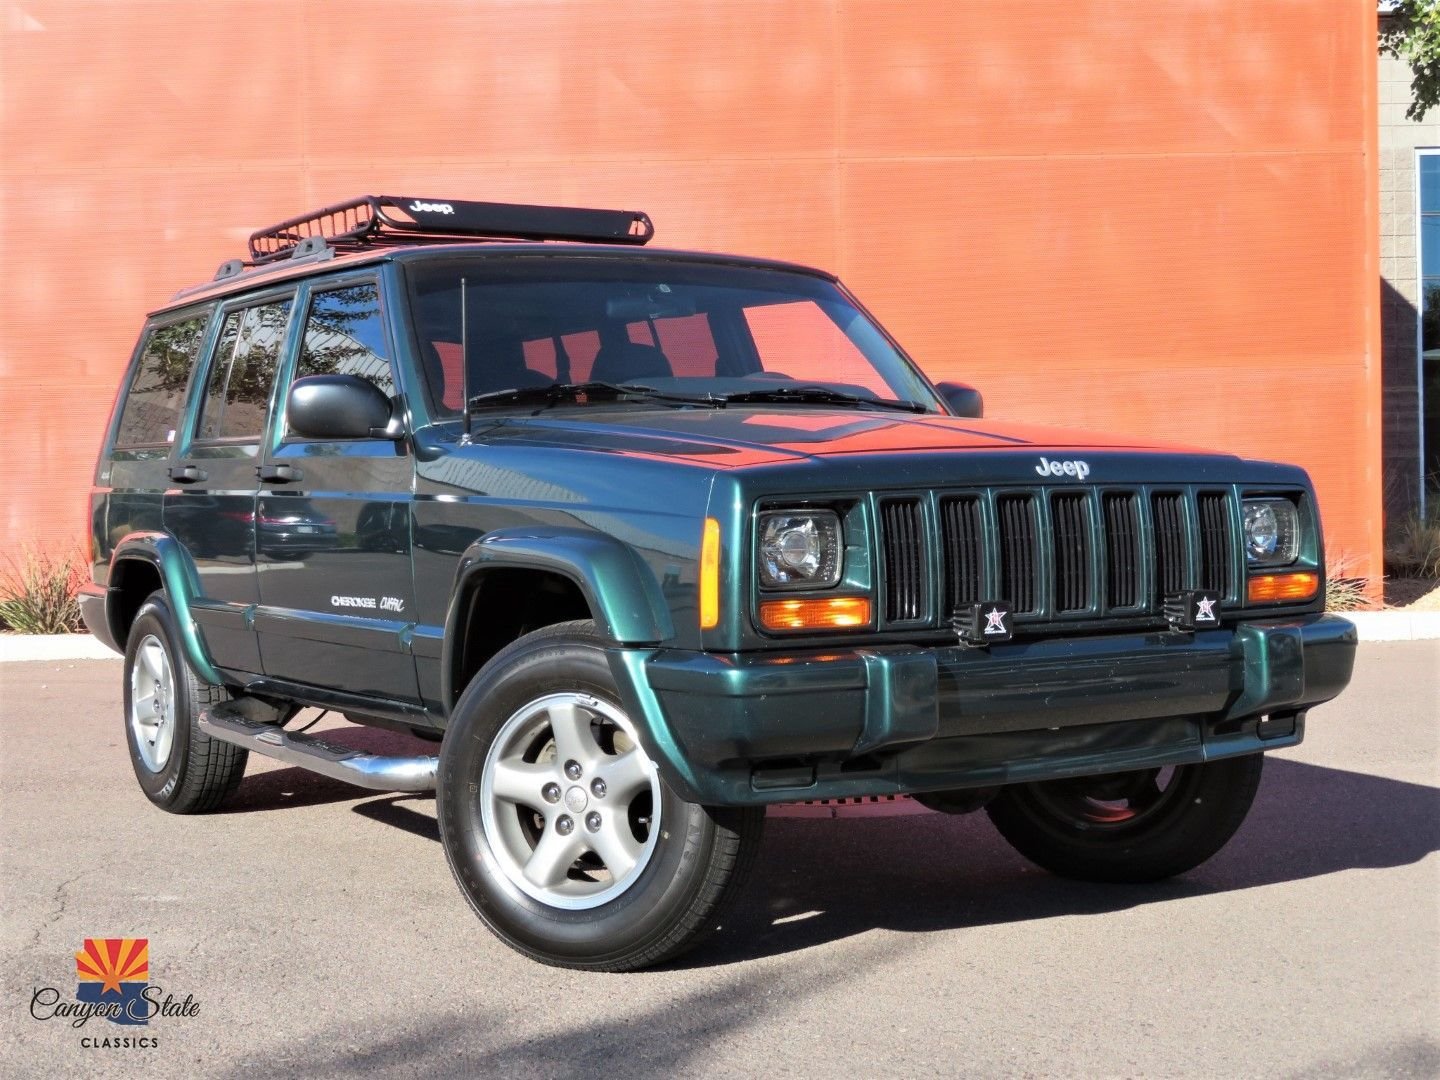 1999 Jeep Cherokee | Canyon State Classics